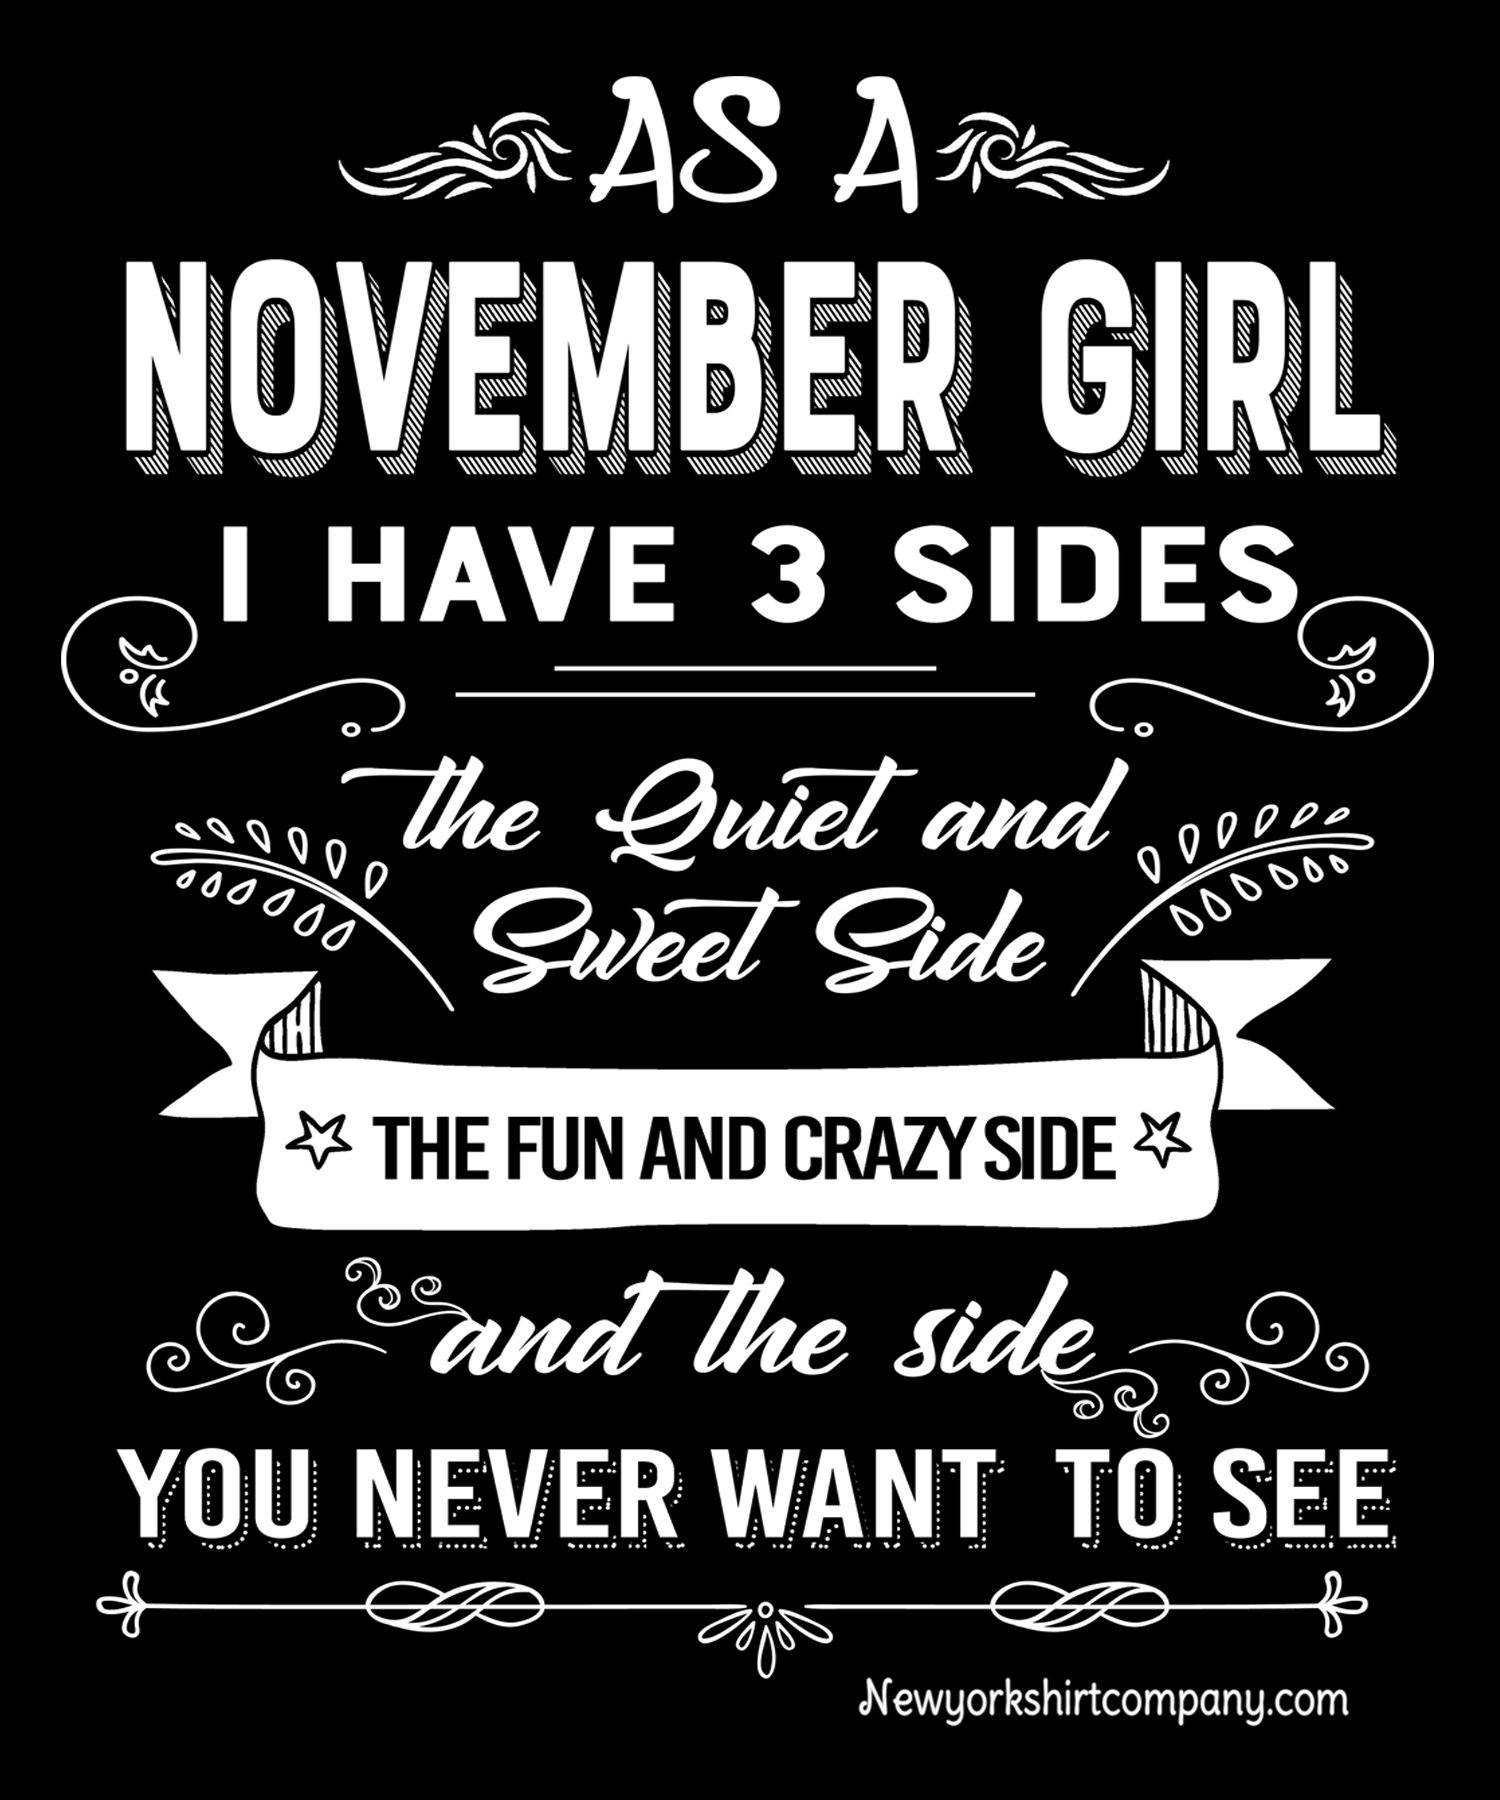 "As a November Girl I have 3 Sides"